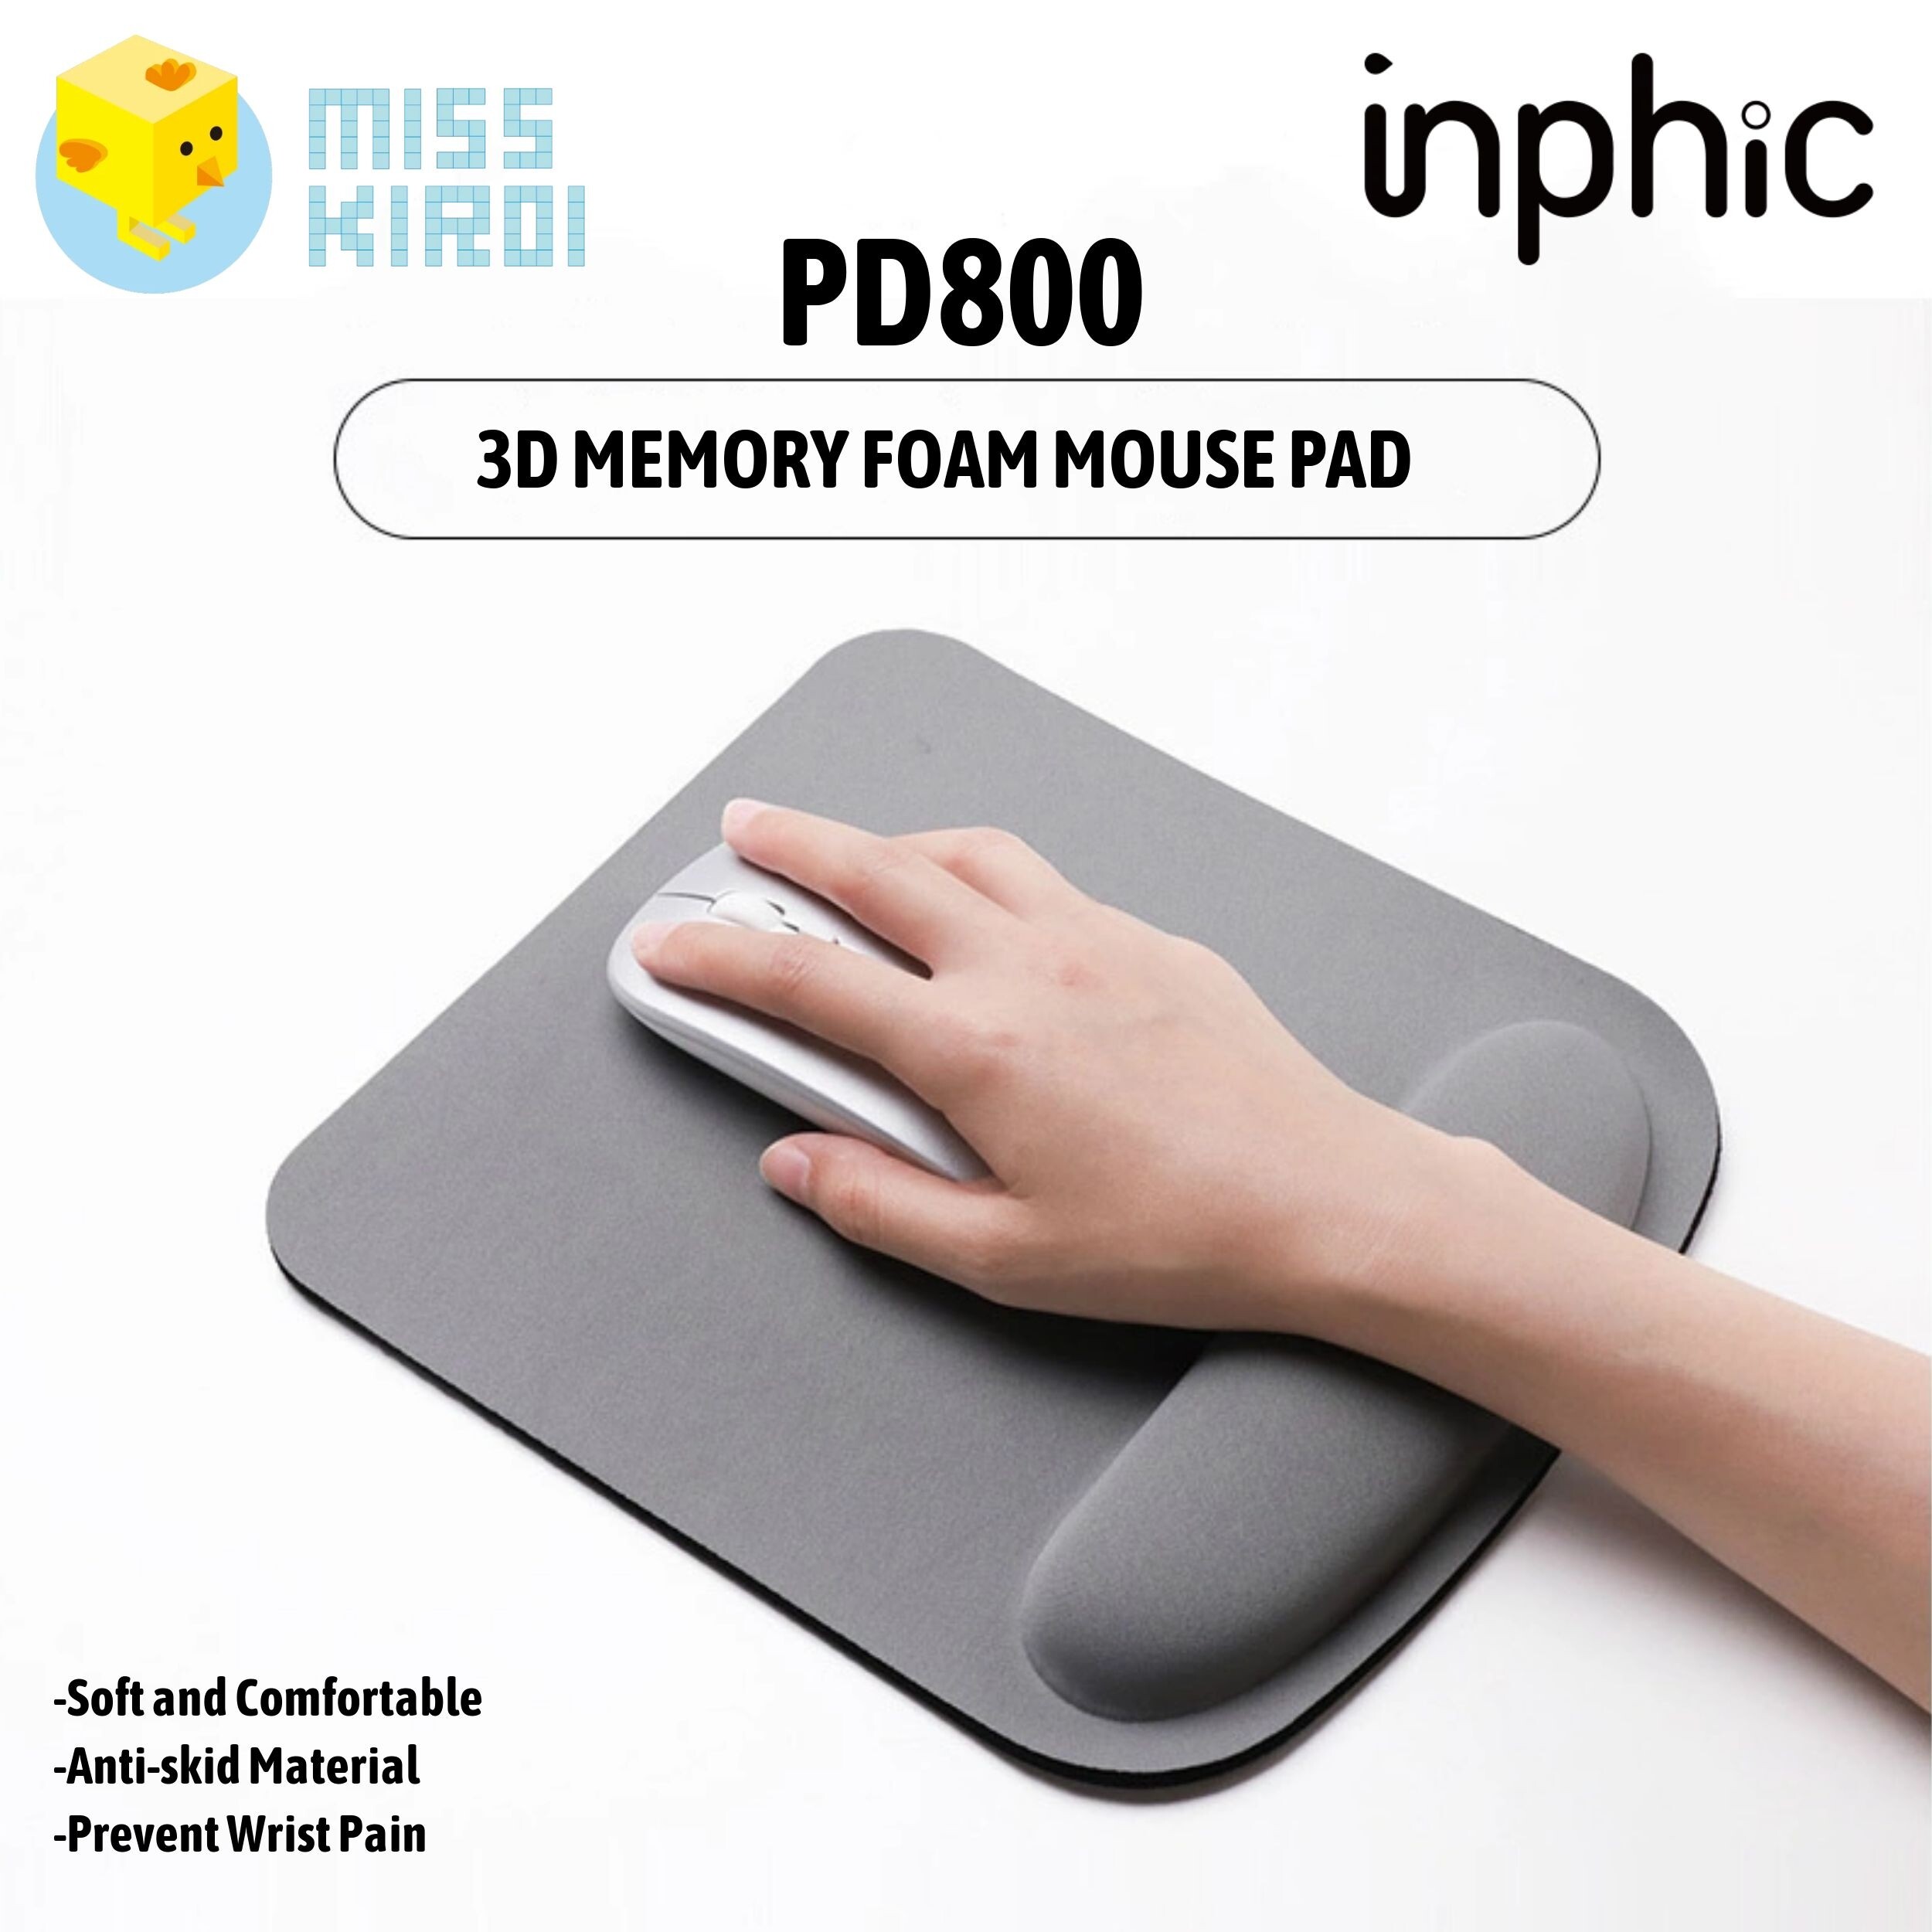 Inphic Pd800 Memory Foam Mouse Pad แผ่นรองเมาส์ Mouse Pad ใช้รองเมาส์ทำให้เพิ่มประสิทธิภาพการใช้เมาส์มากขึ้น. 